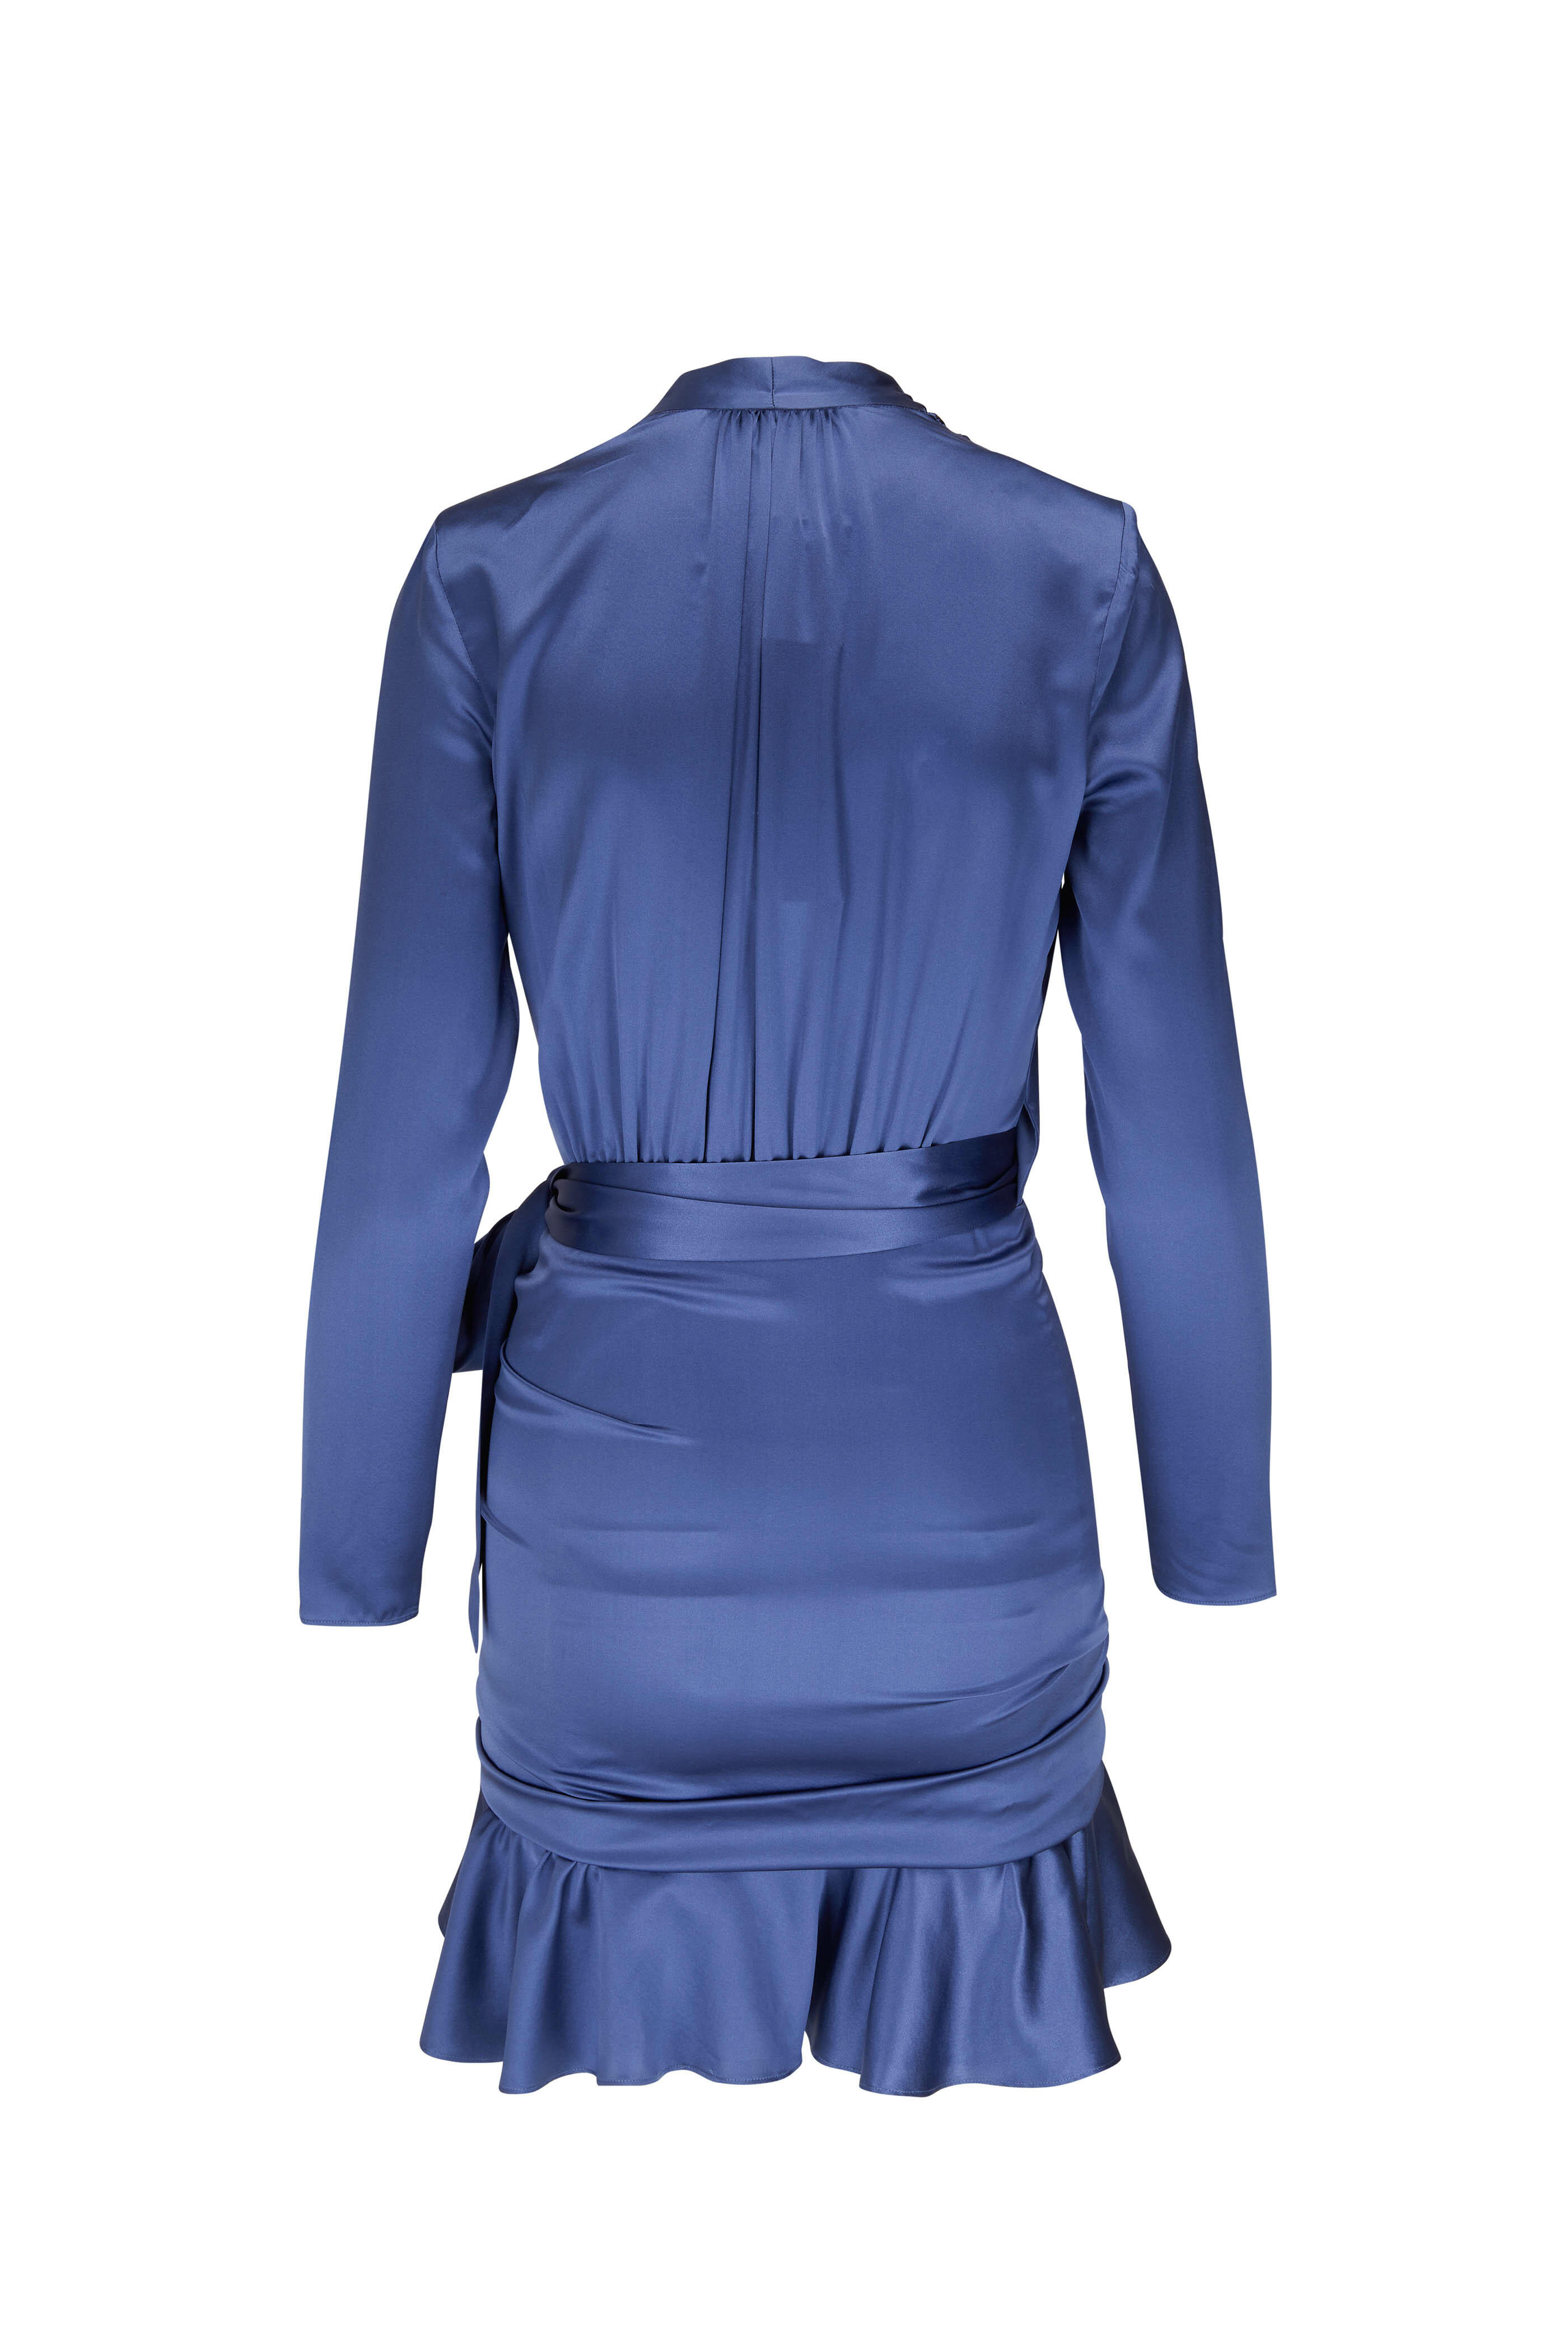 Veronica Beard - Agatha Steel Blue Silk Mini Dress